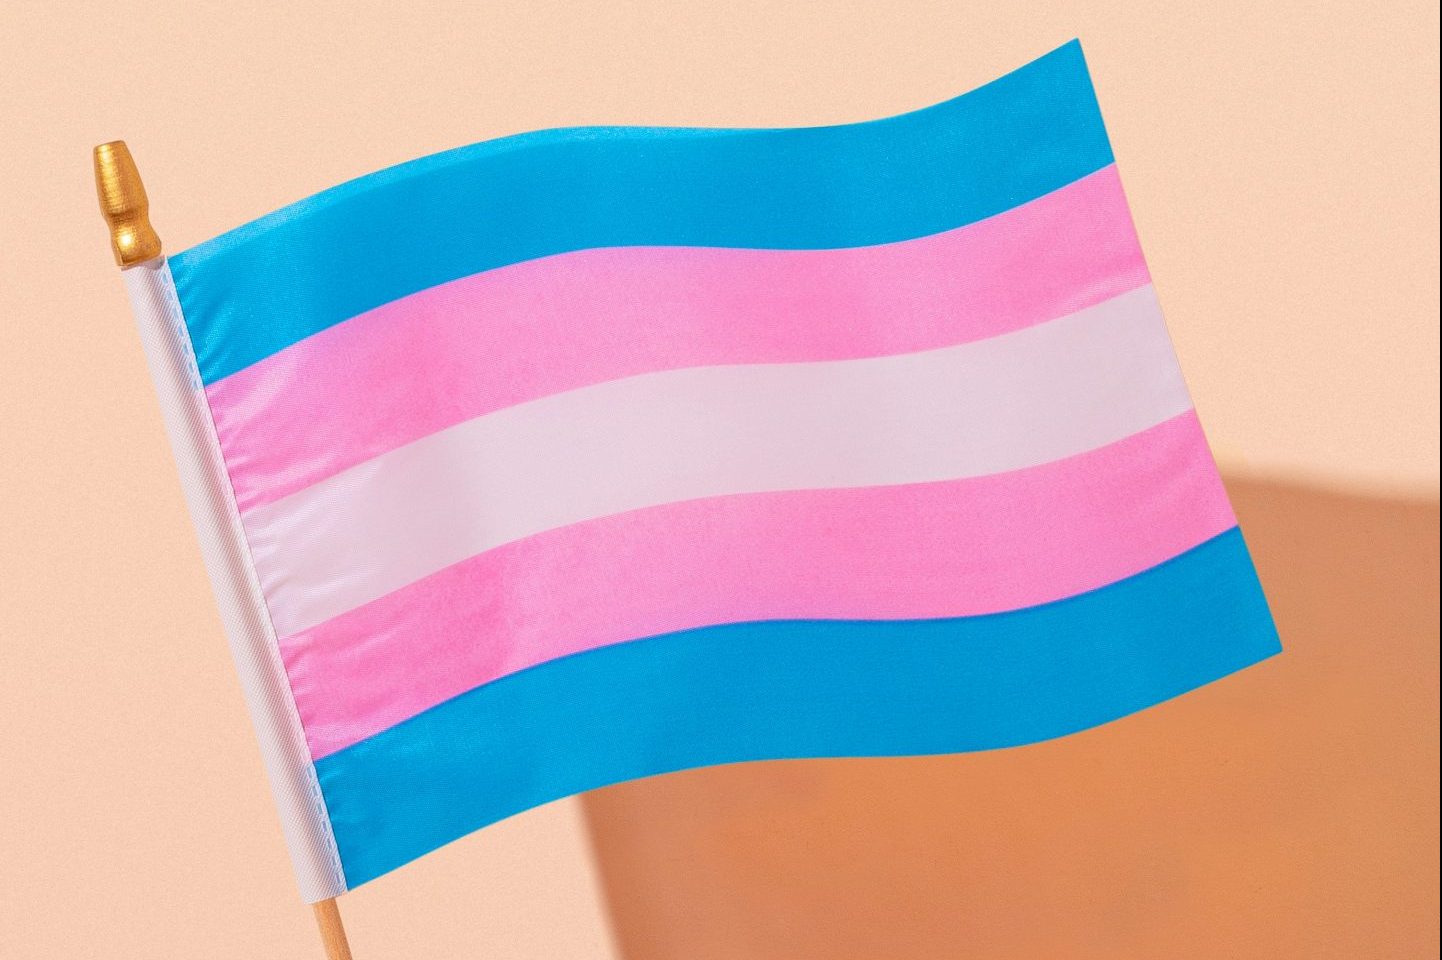 A small trans flag